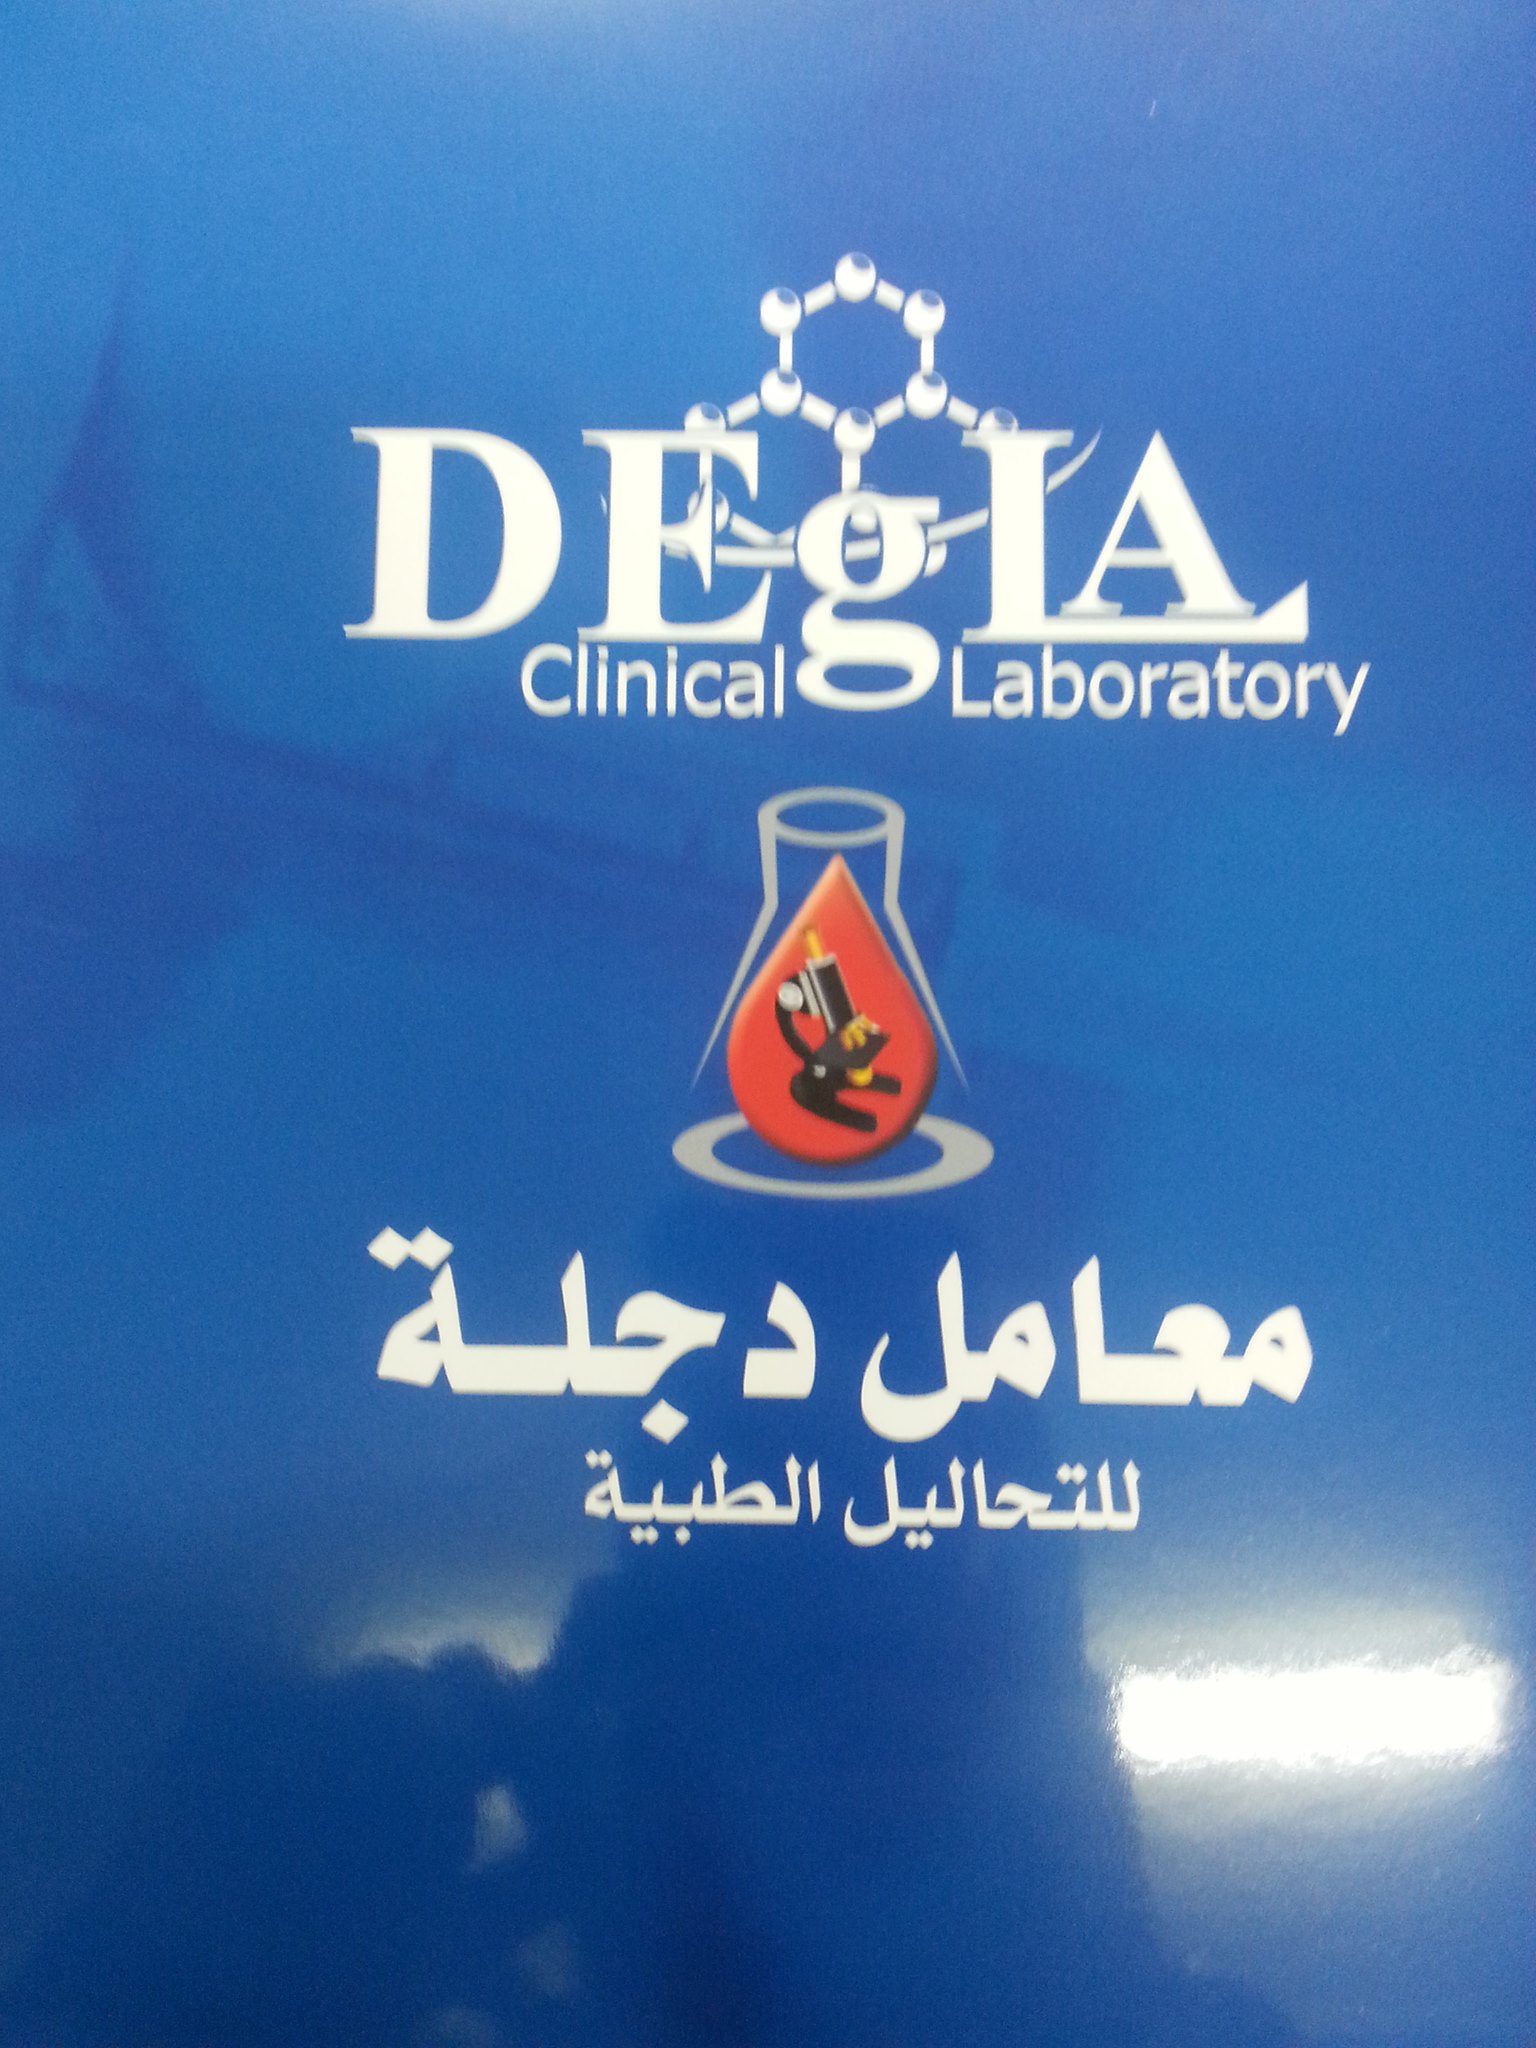 Degla Laboratories for Medical Analysis